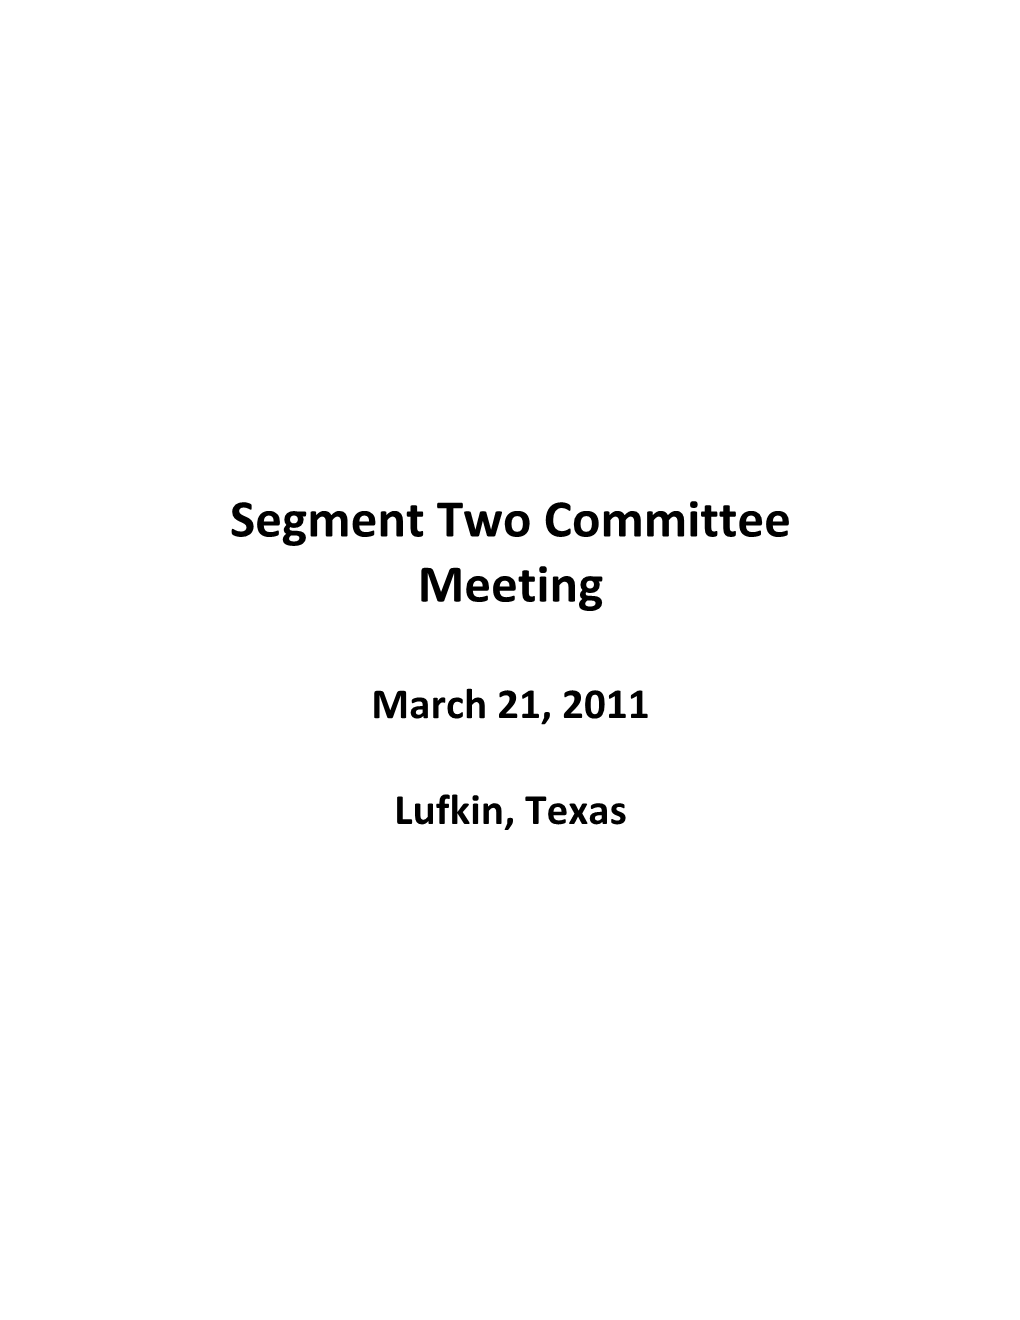 Segment Two Committee Meeting